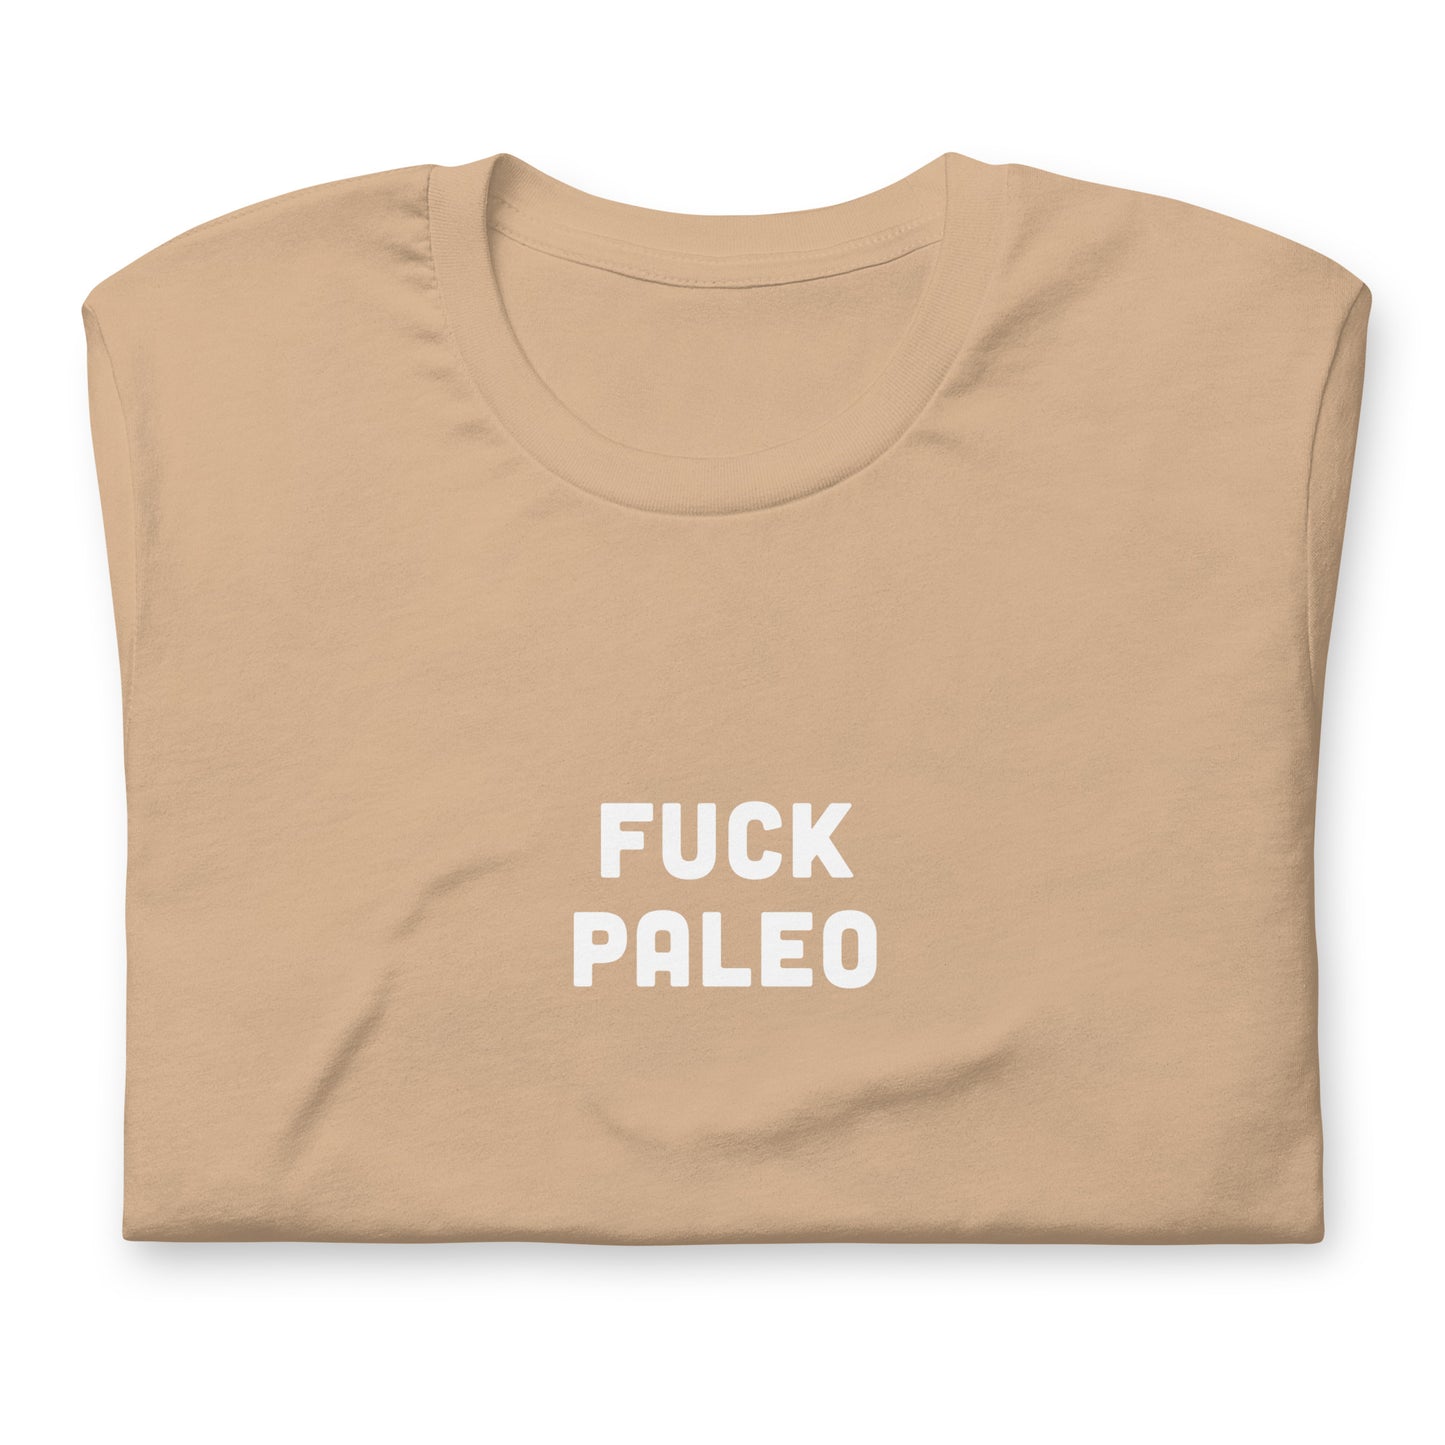 Fuck Paleo T-Shirt Size 2XL Color Forest